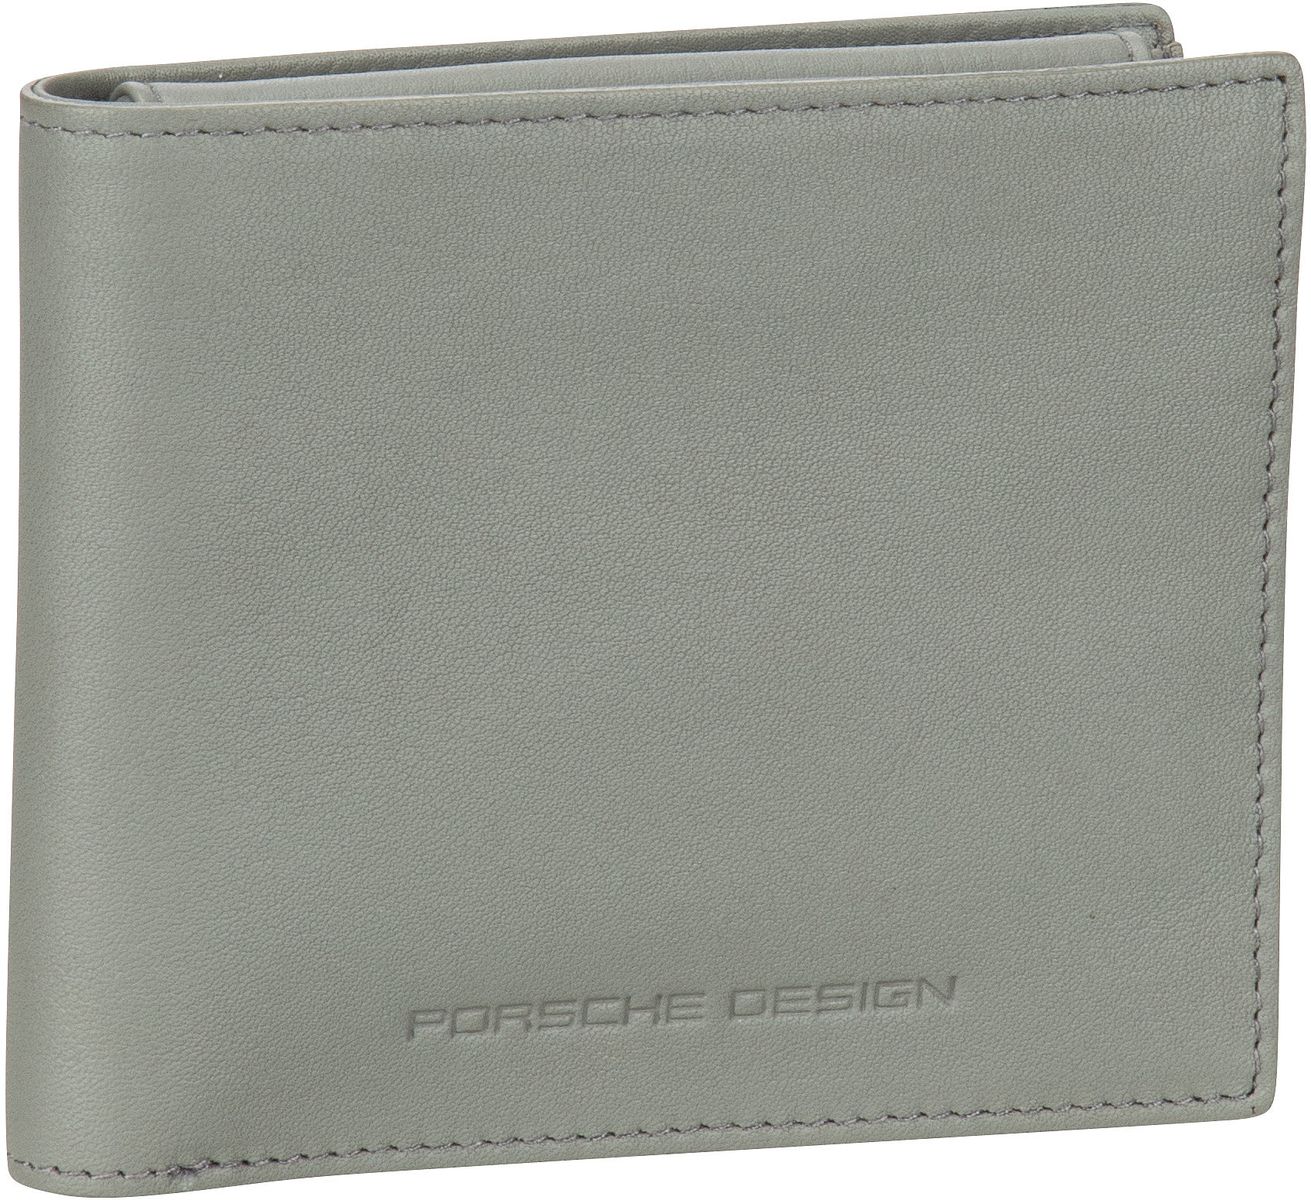 Porsche Design Business Wallet 9903 - Grey